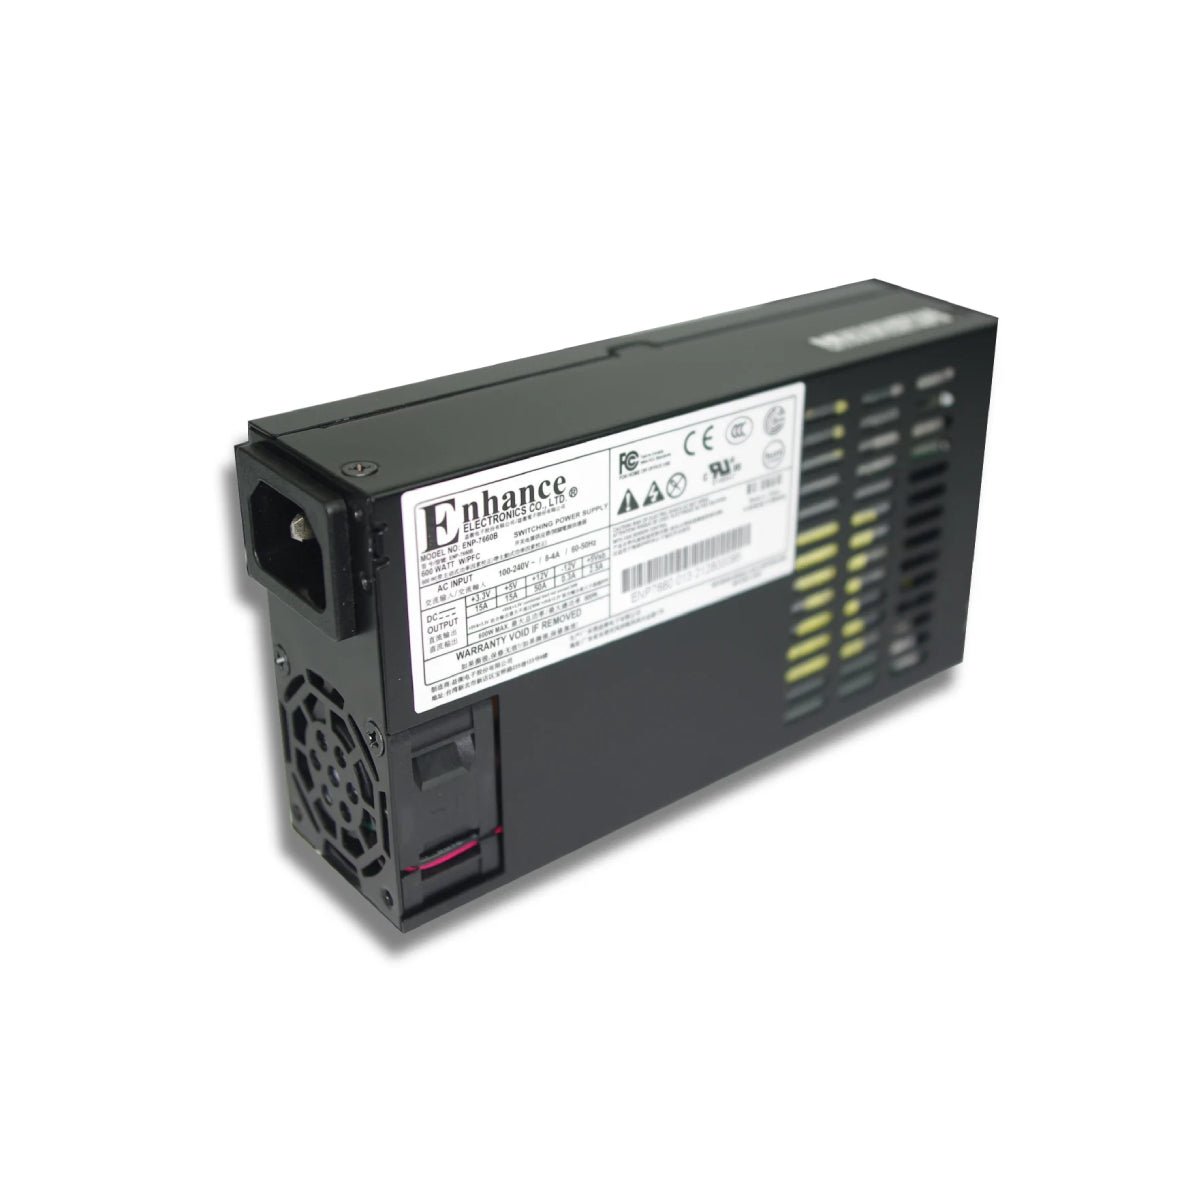 Overtek Enhance ENP-7660B 600W Platinum ATX Non-Modular Power Supply - مزود طاقة - Store 974 | ستور ٩٧٤